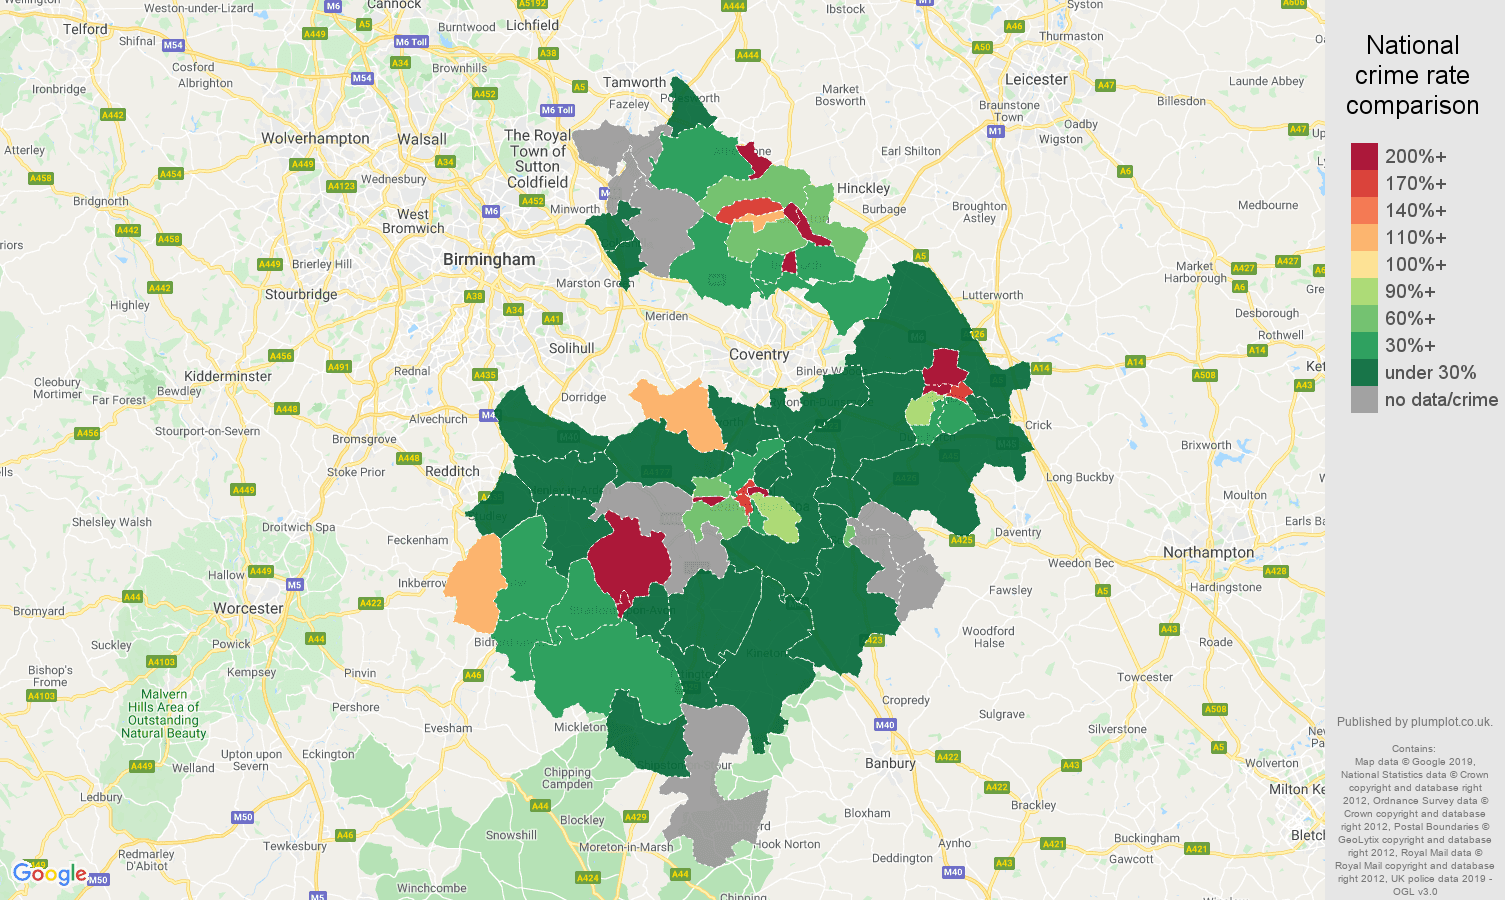 Warwickshire shoplifting crime rate comparison map